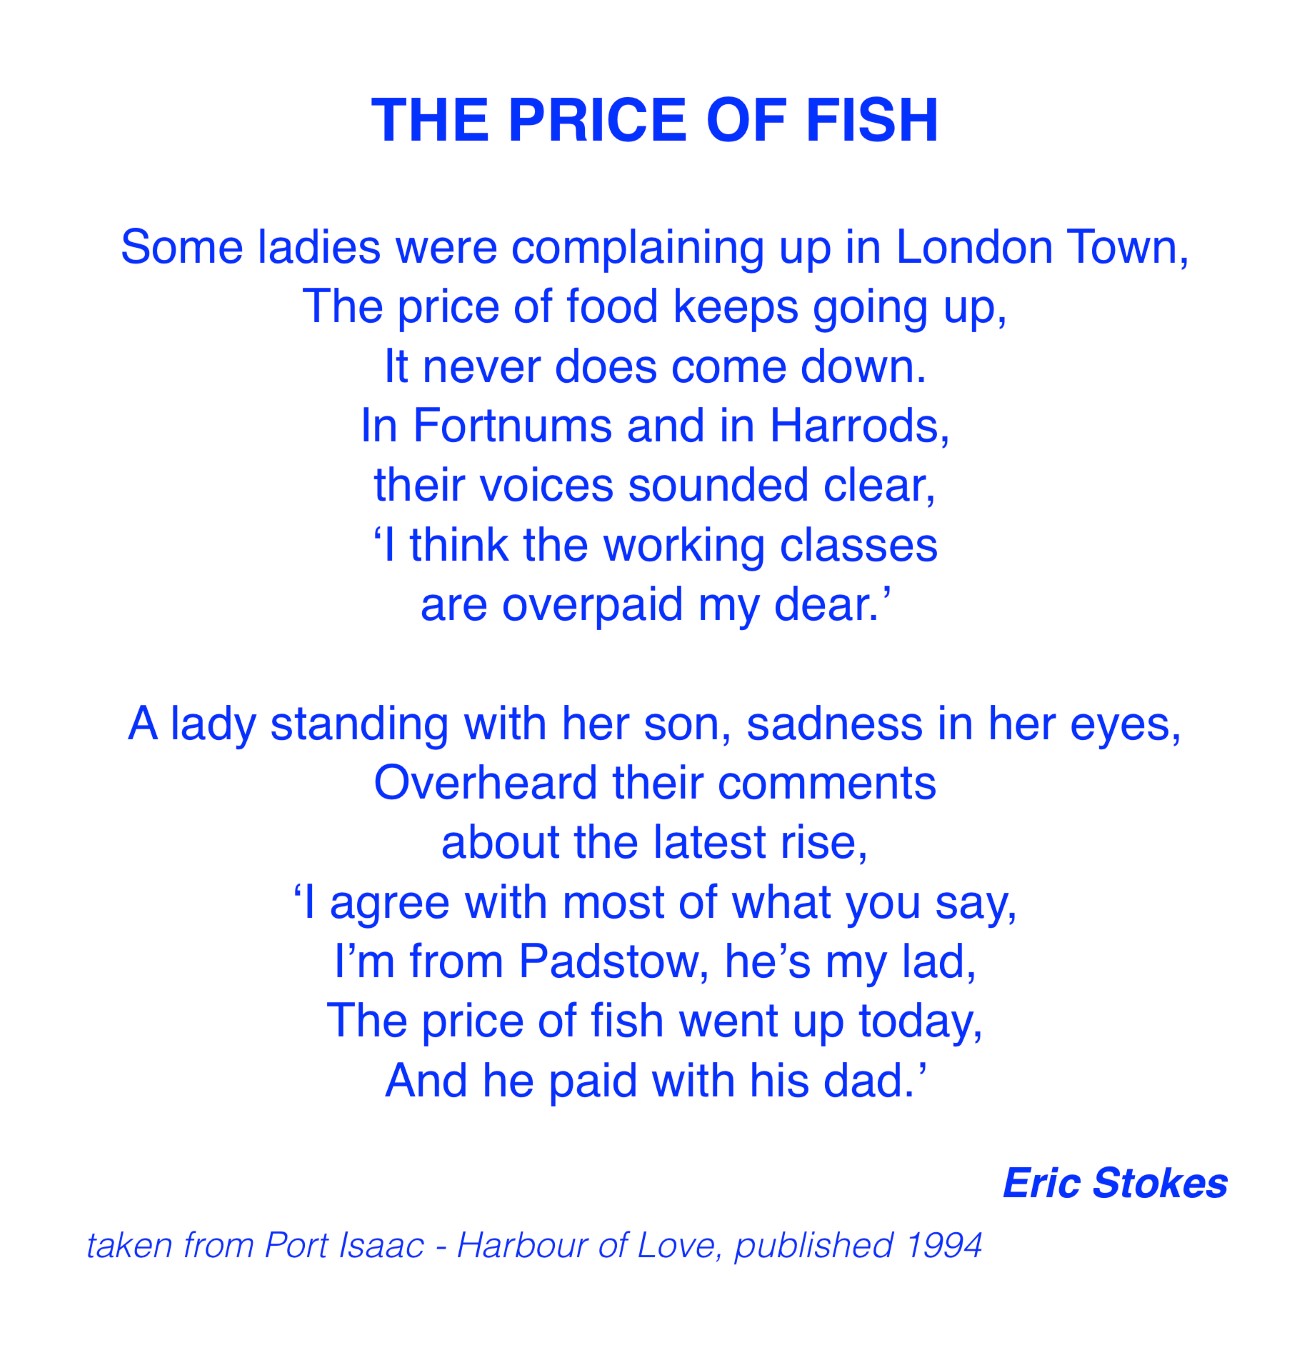 The Price of Fish